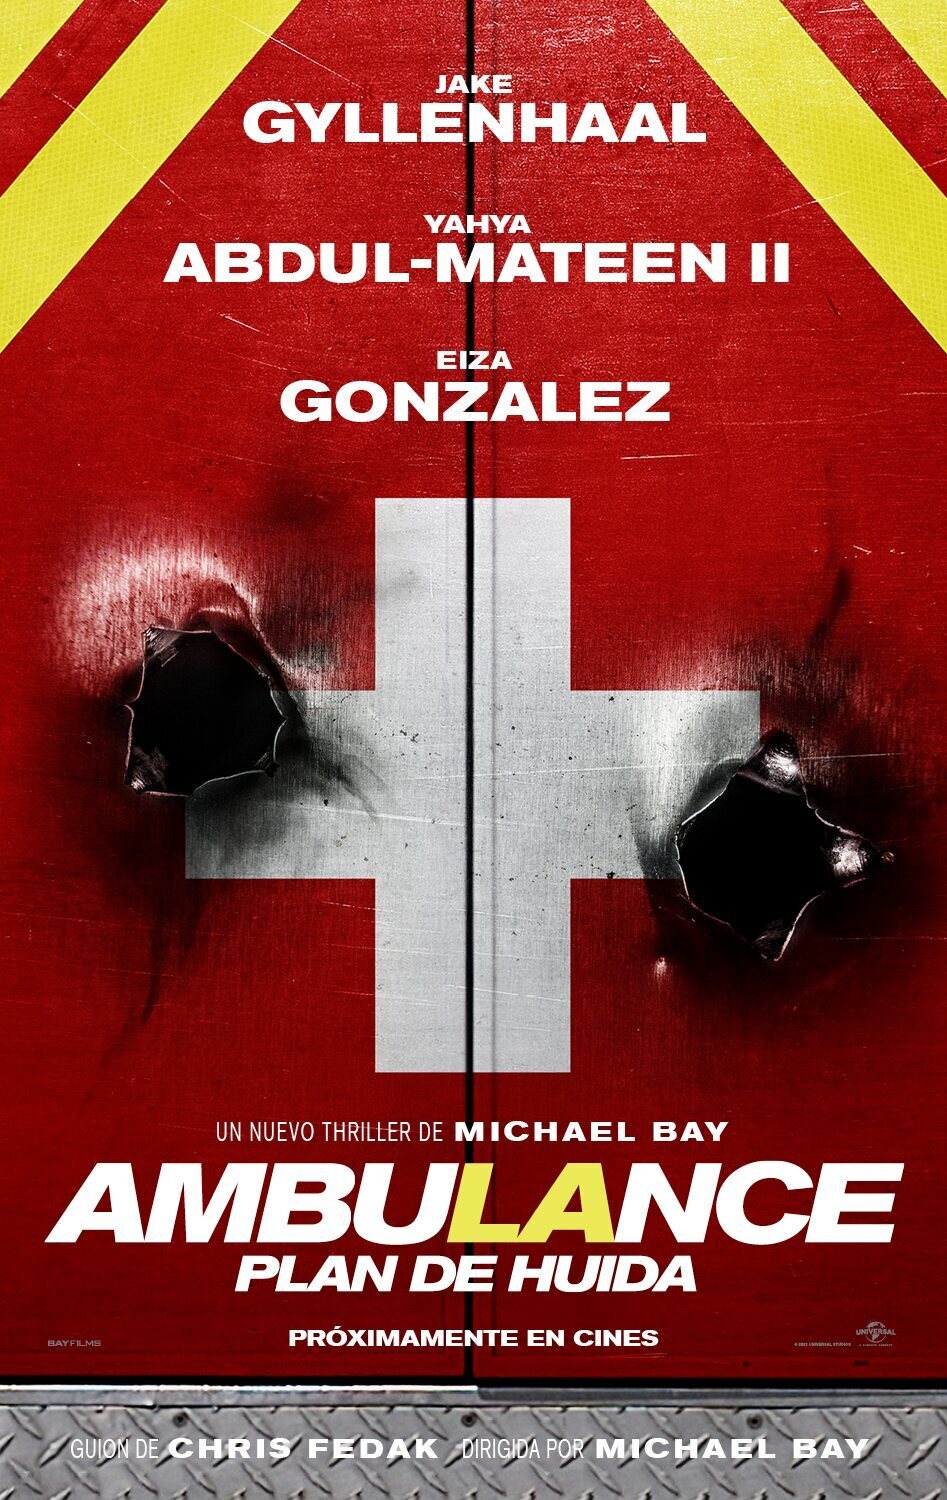 Poster of Ambulance - Ambulance. Plan de huida